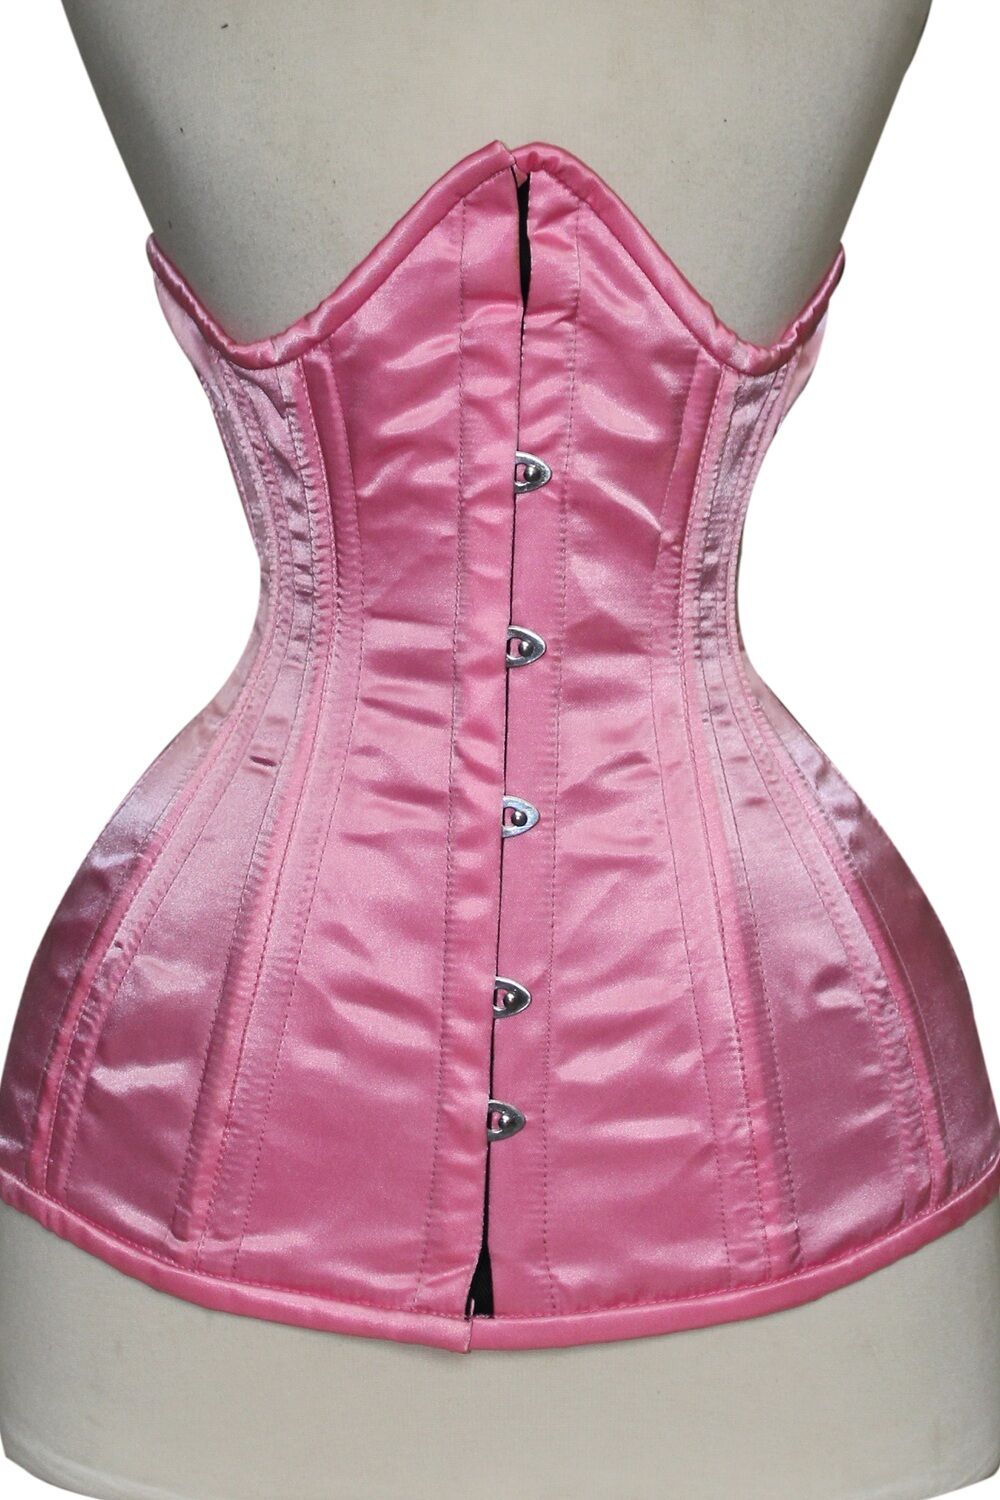 Top Quality steel boned Waist training softsatin corset in 20